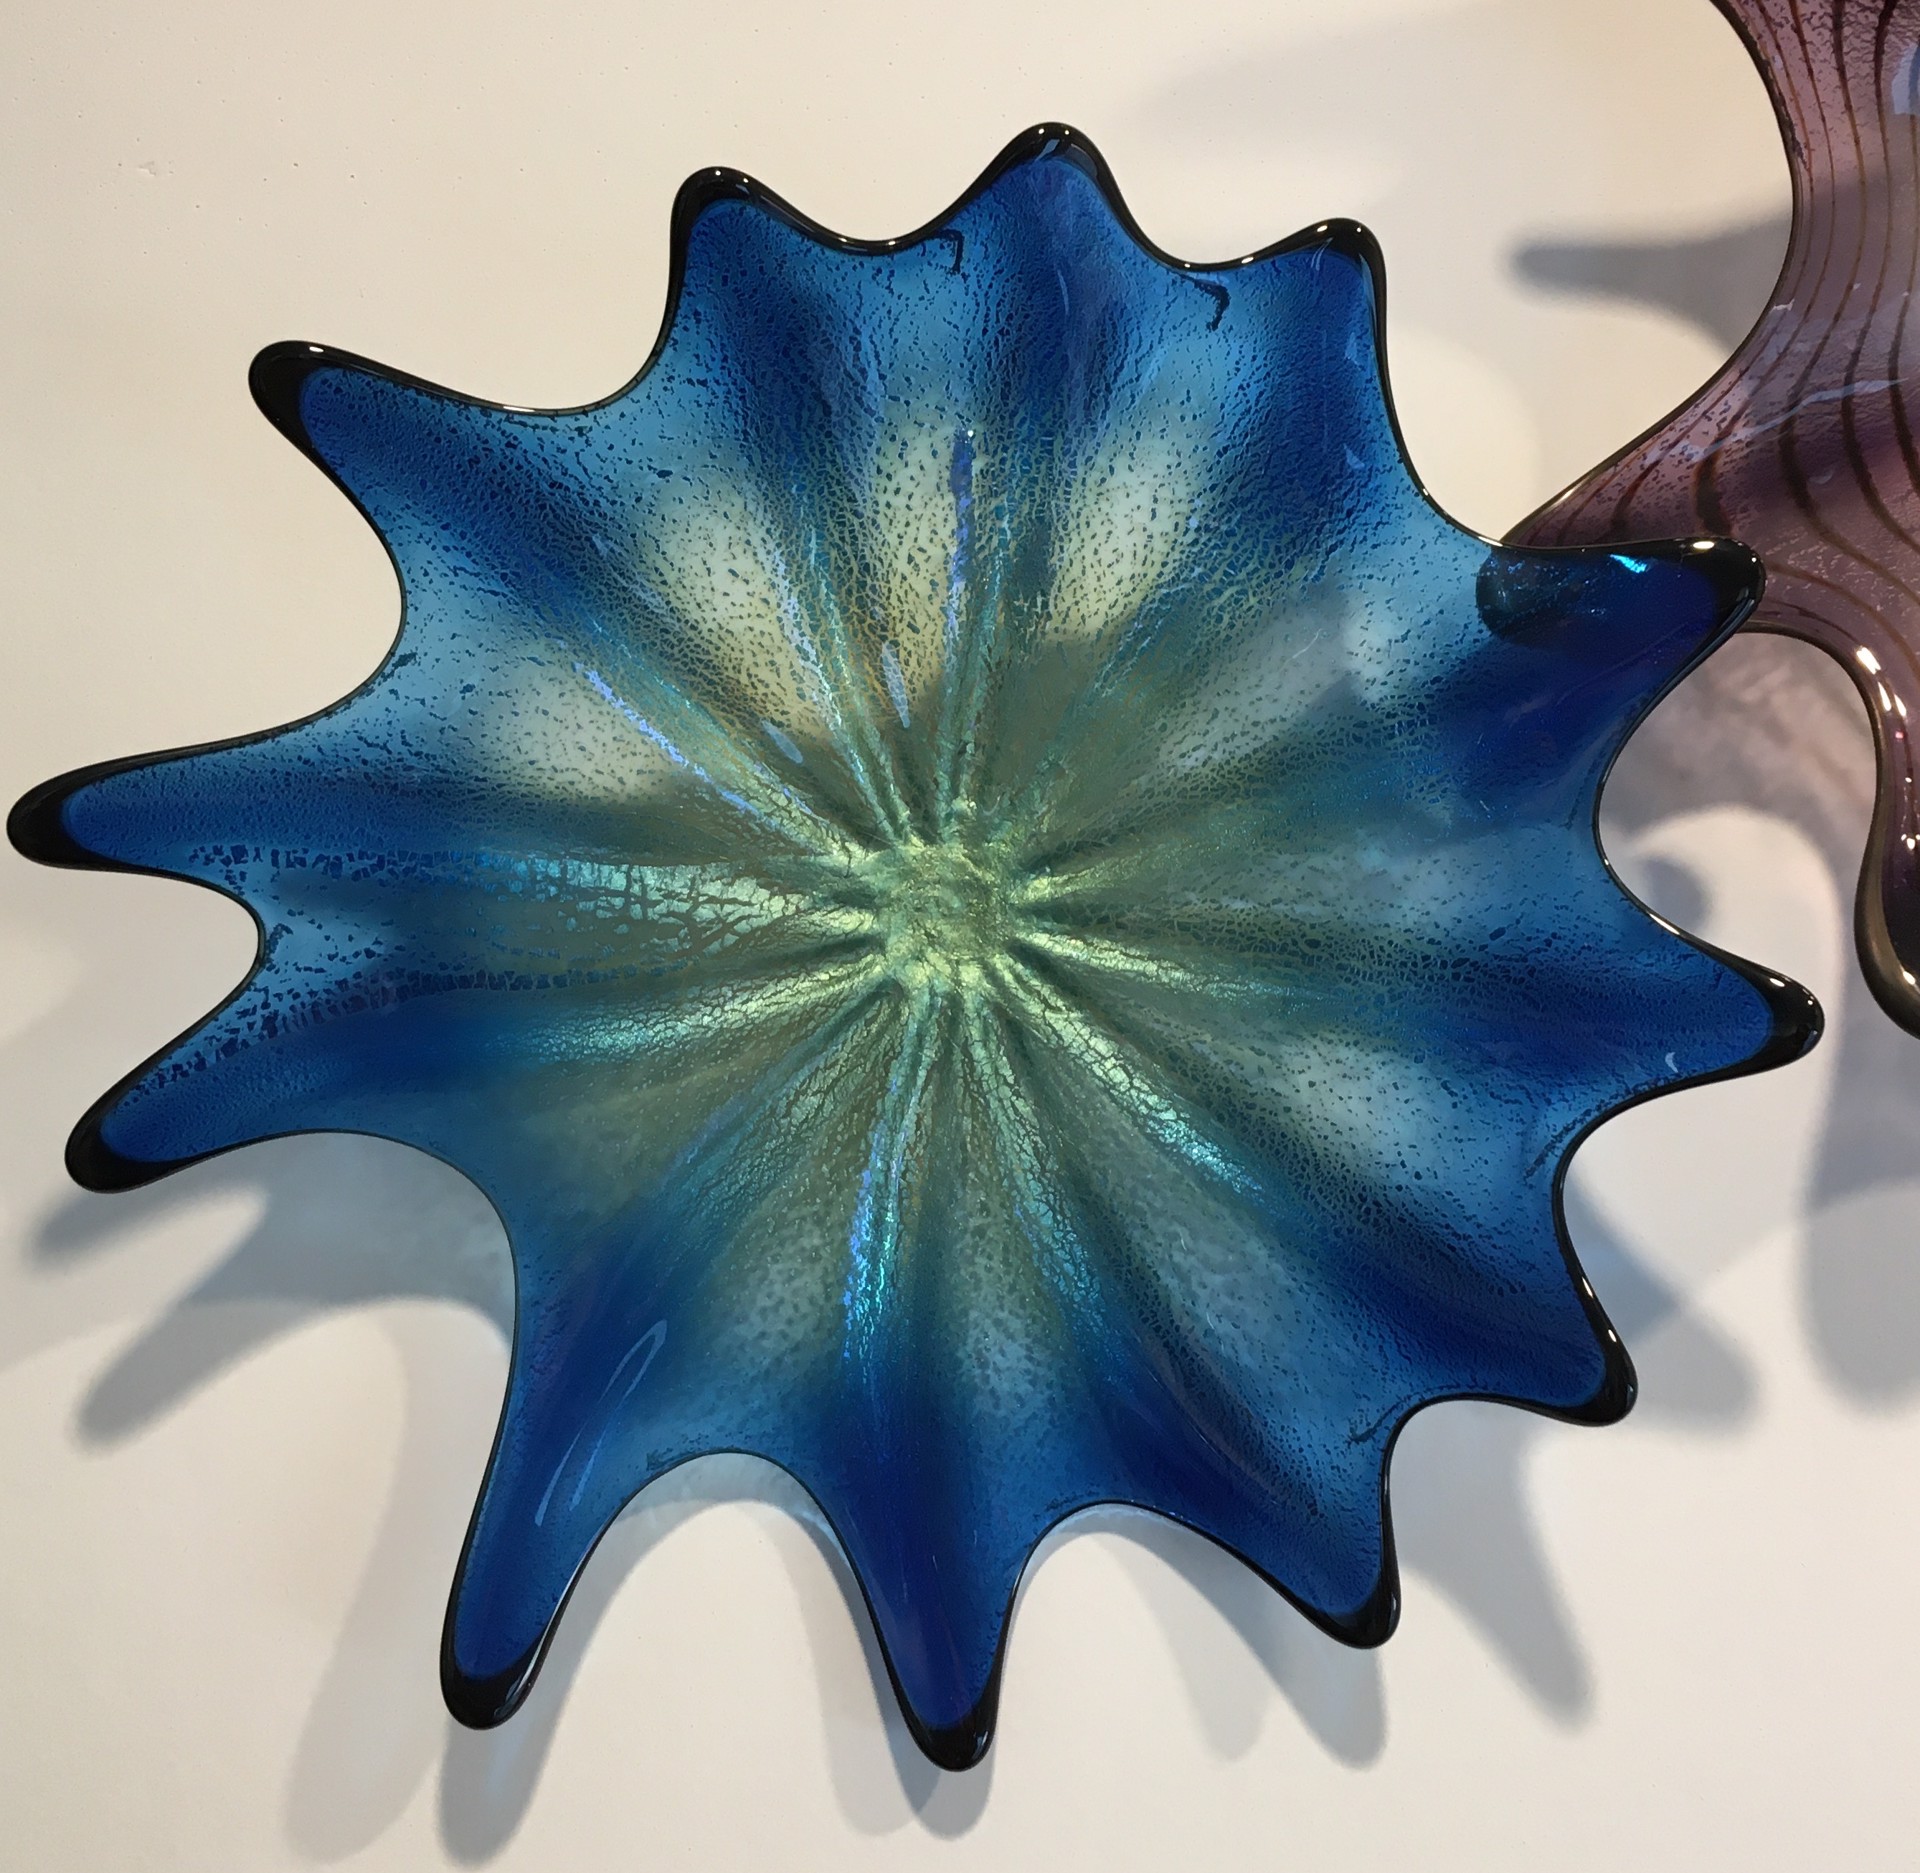 Capri plate (Petite) by Seattle Glassblowing Studio